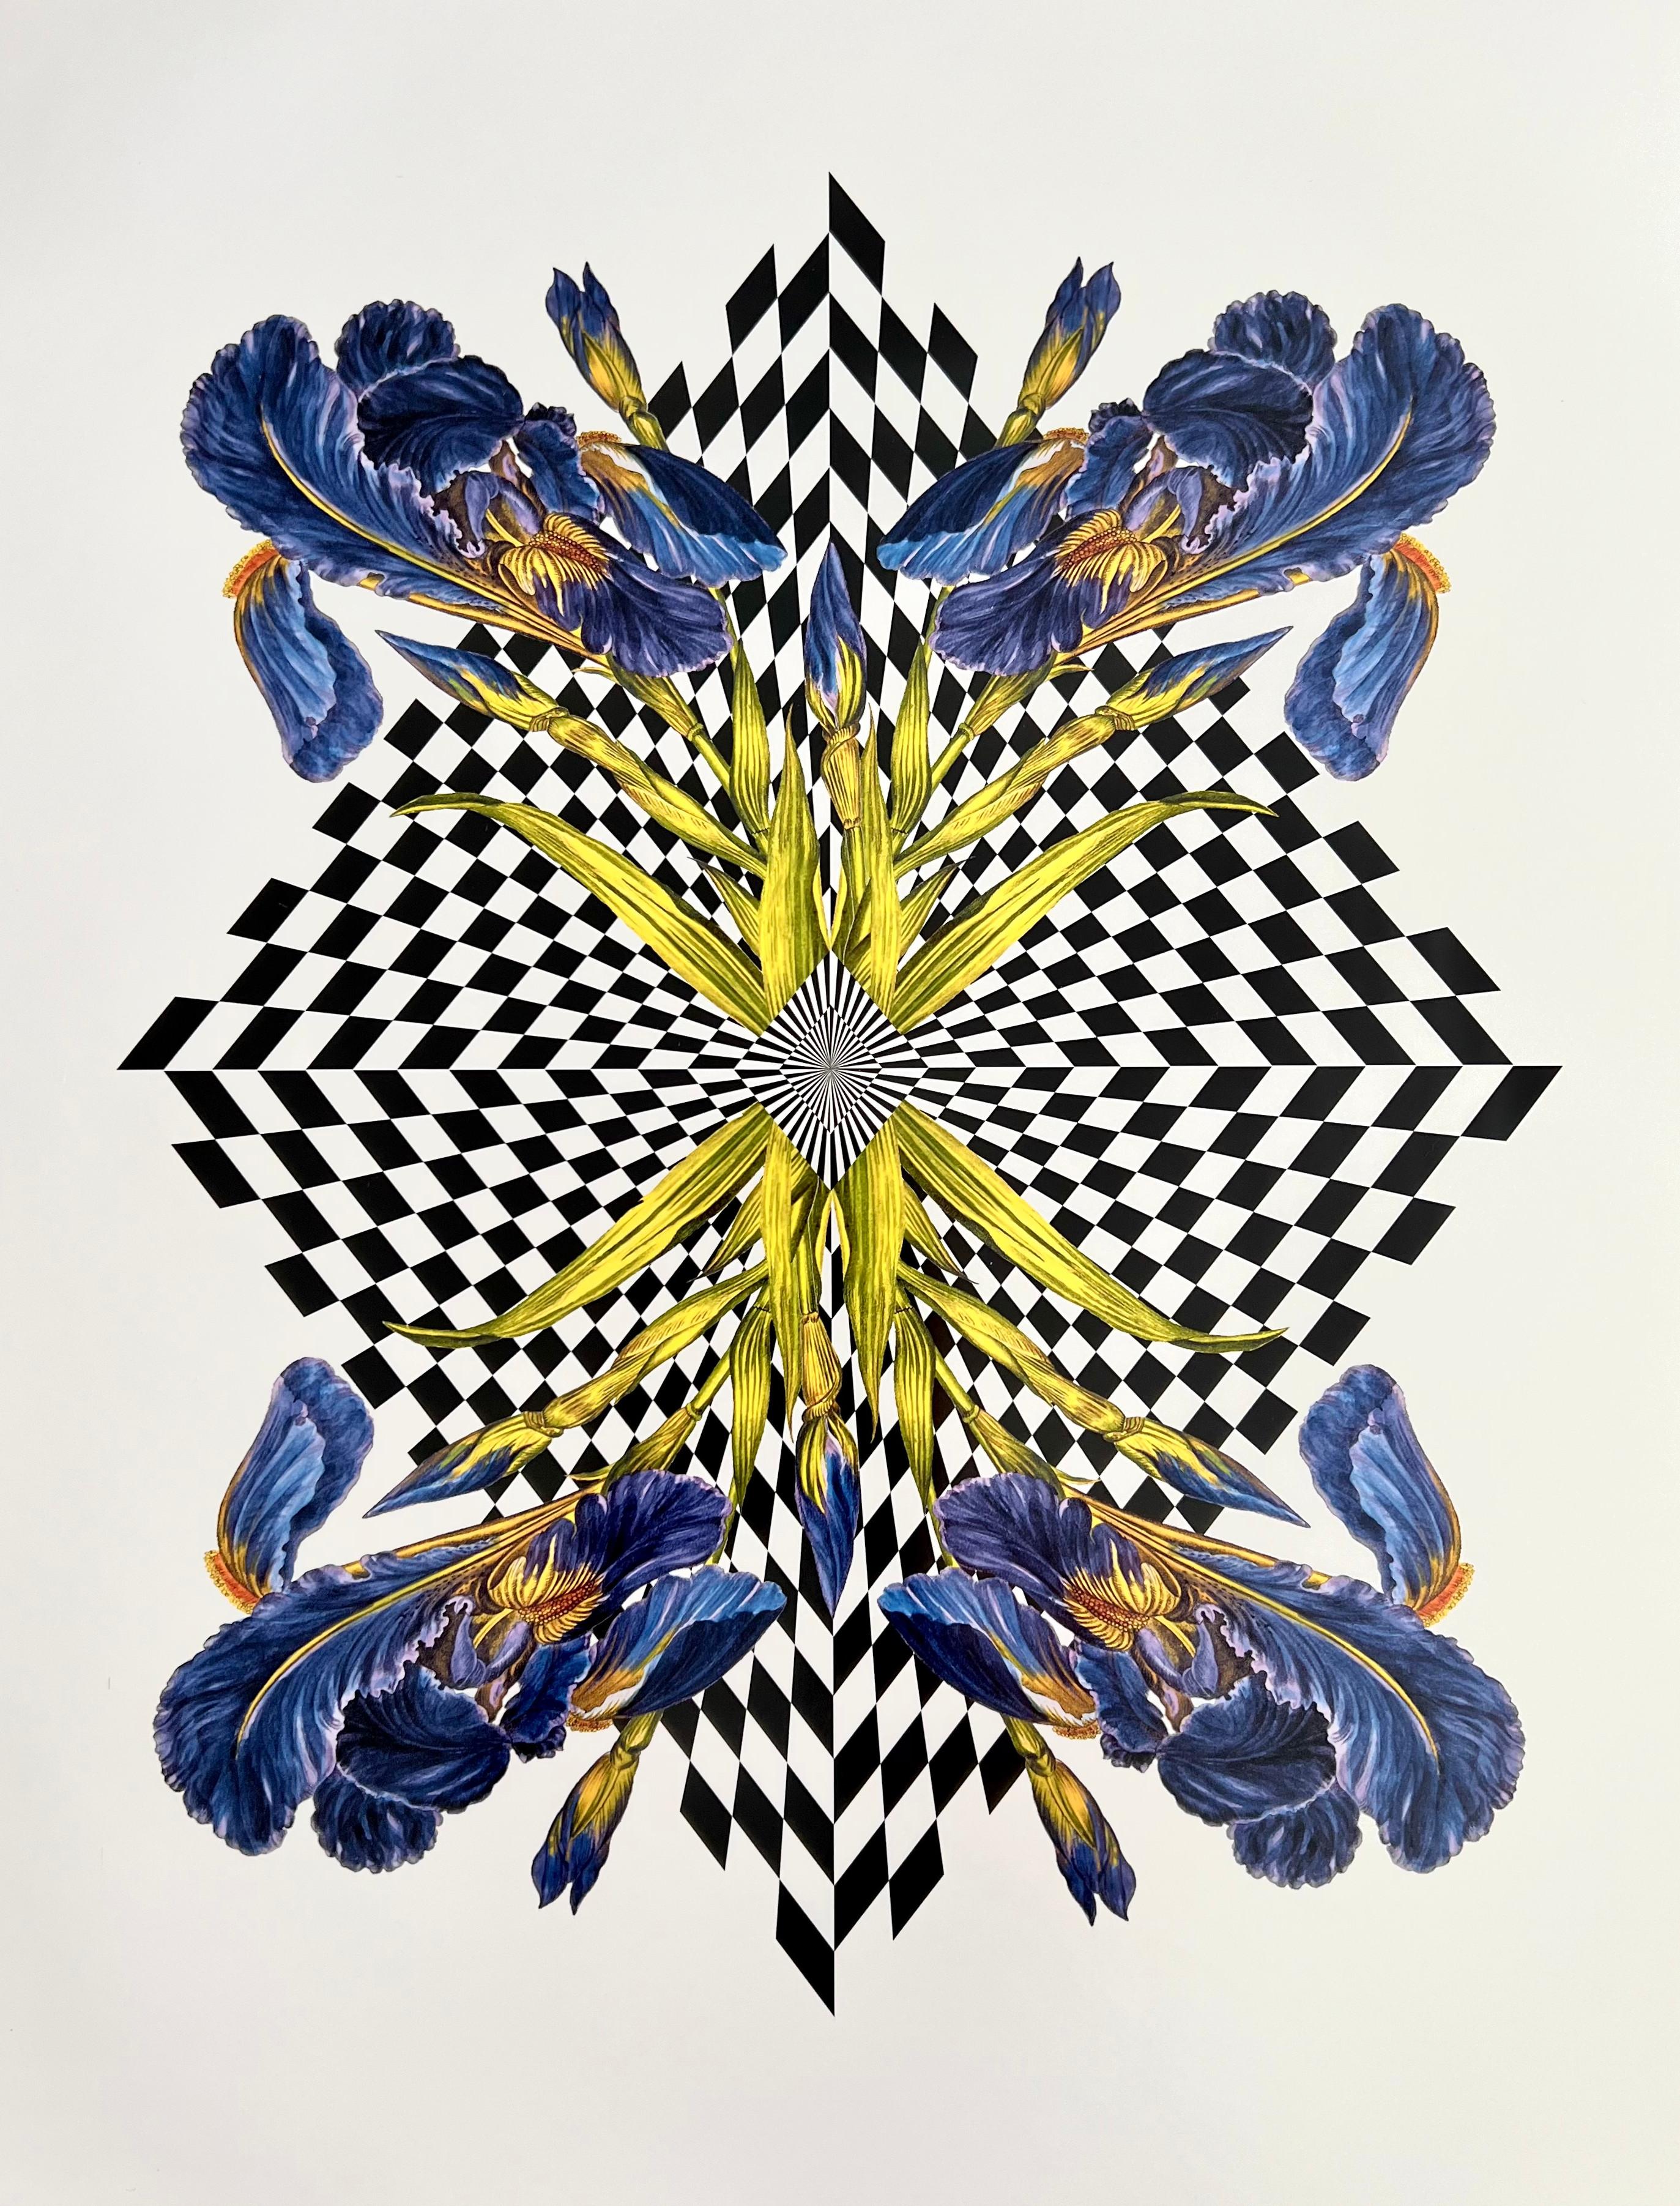 Diamond Iris (Cut-out, Collage, Black & White, Patterns, Negative Space) - Print by Louise Marler